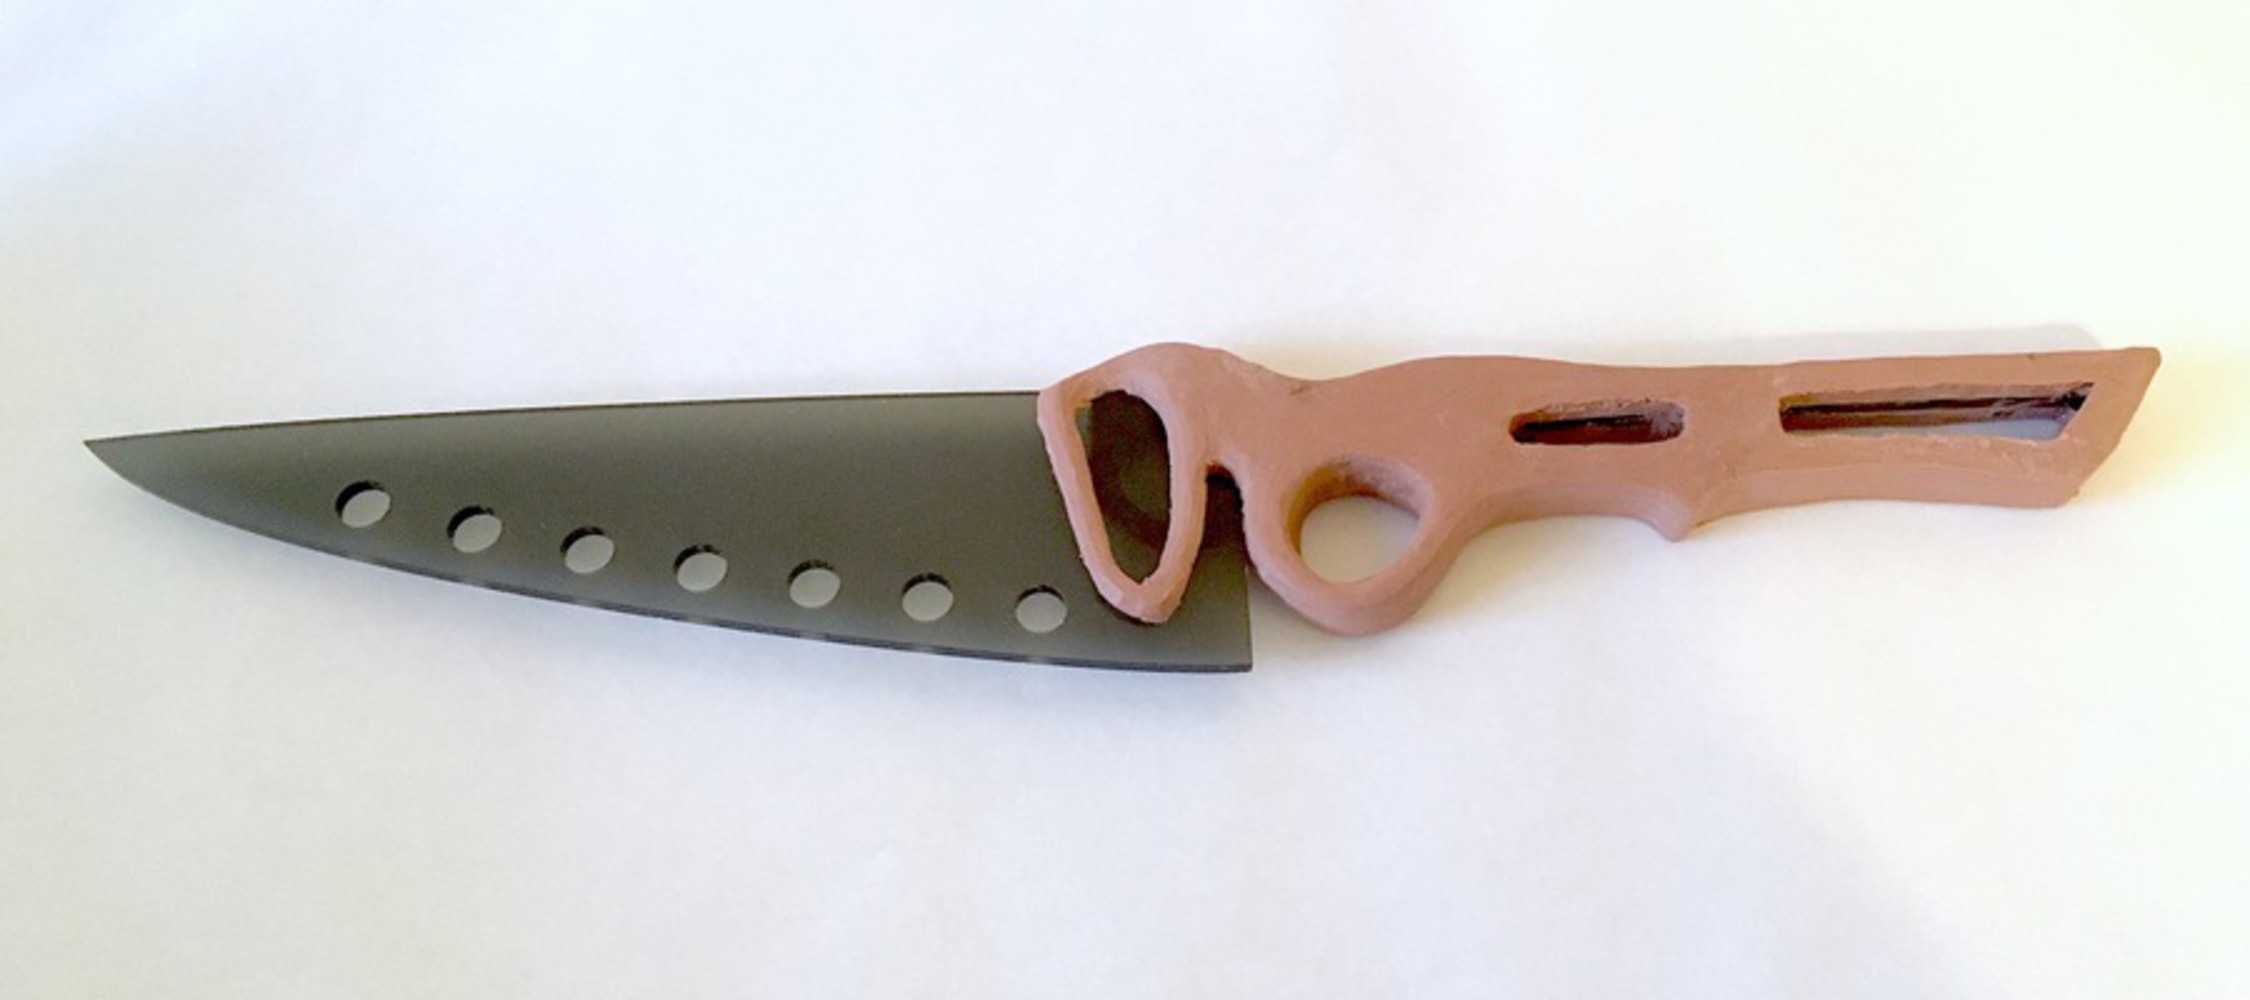 Refined knife.jpg.thumb